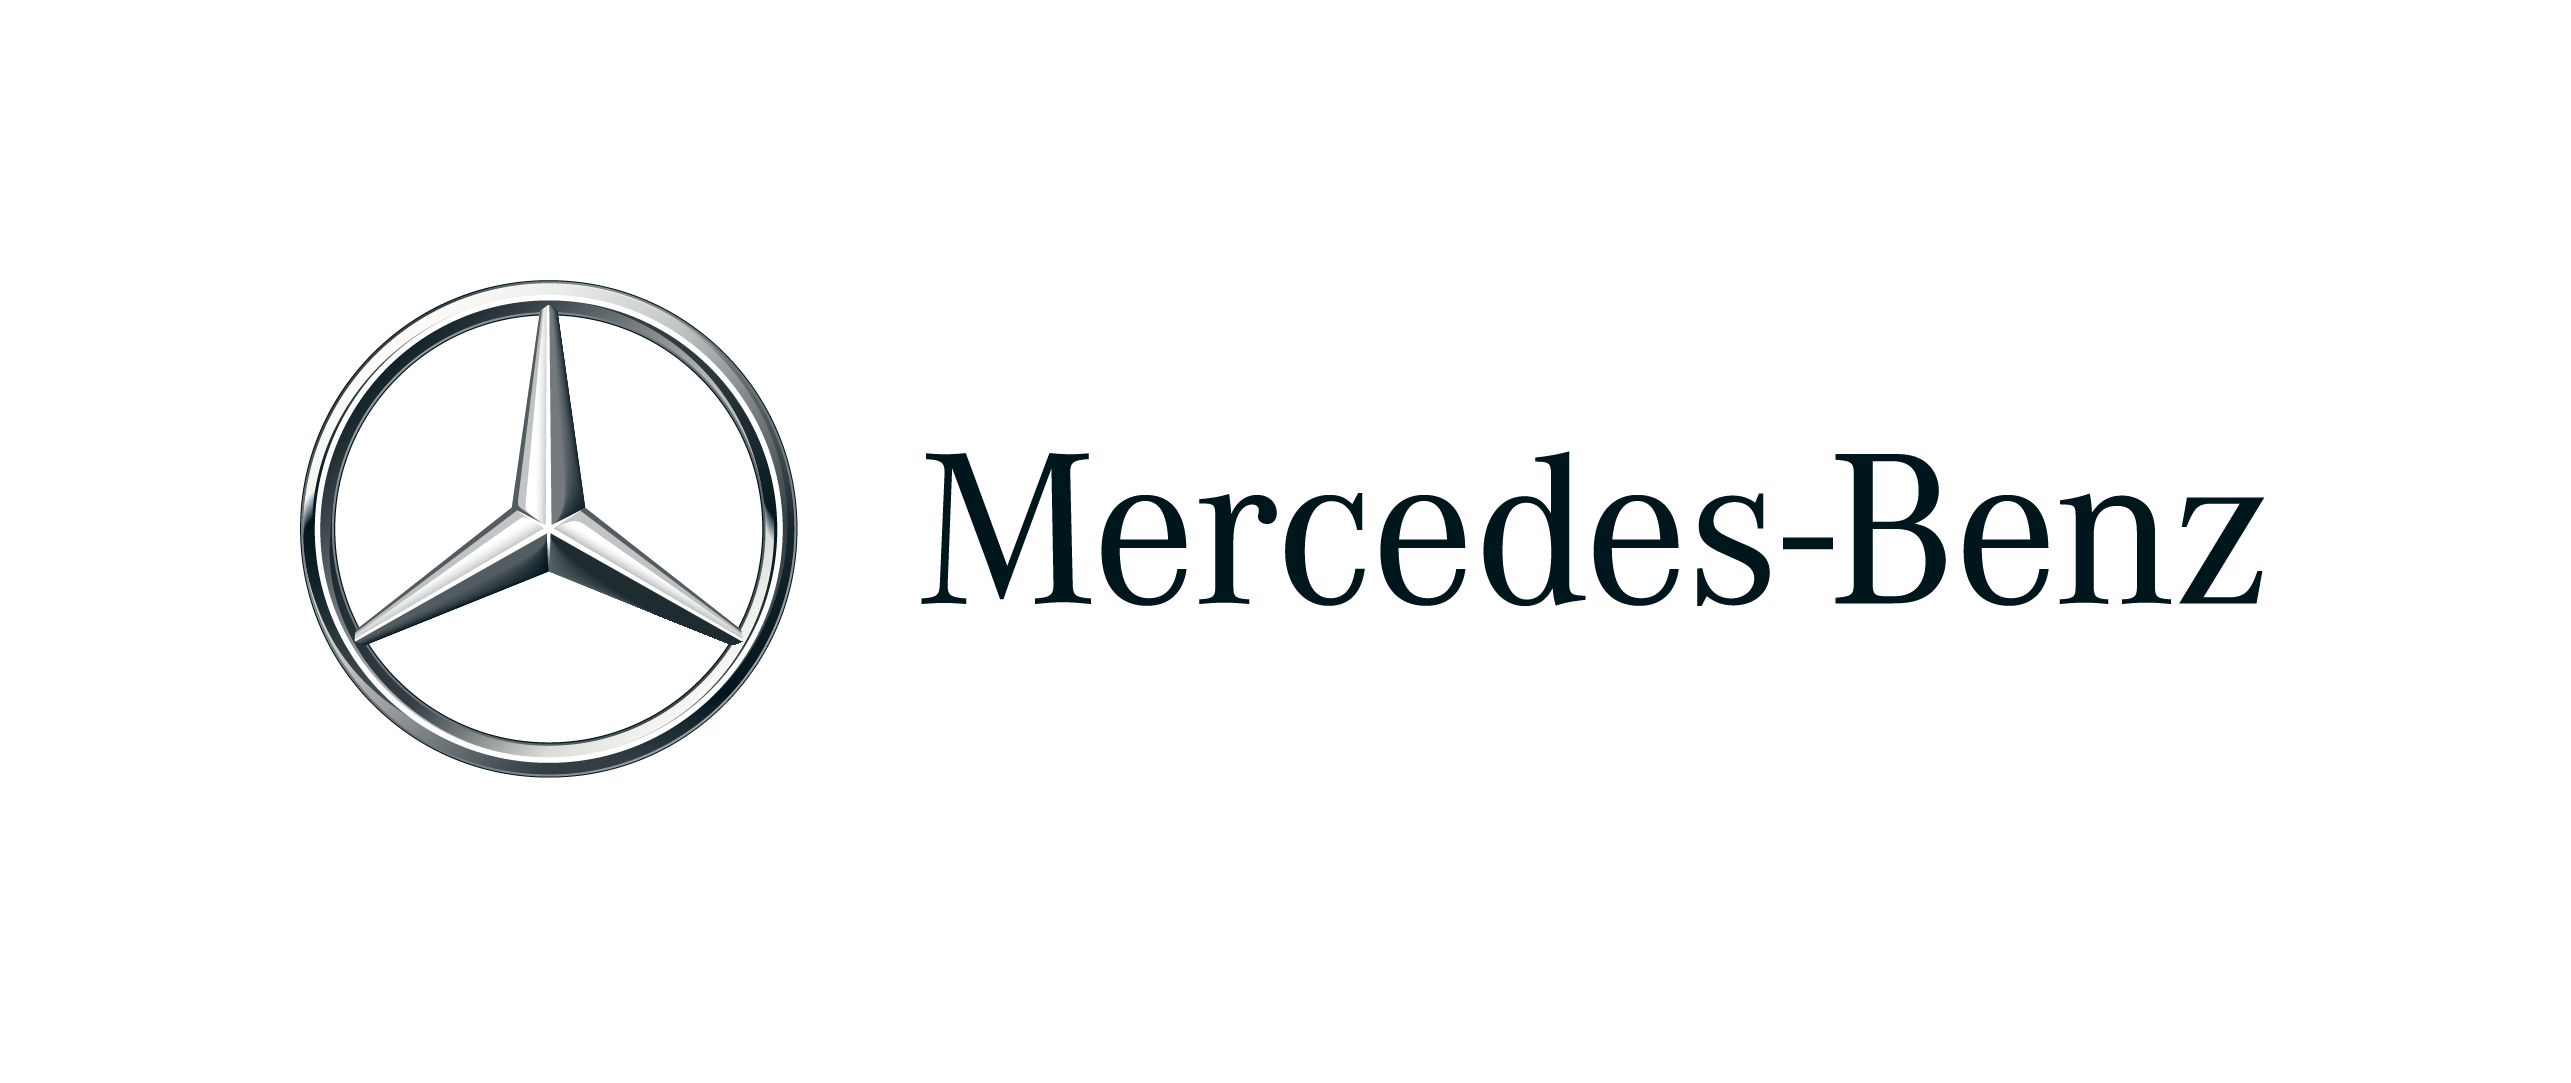 Mercedes текст. Мерседес лого. Логотип компании Мерседес. Mercedes Benz надпись. Mersedes lagatib.